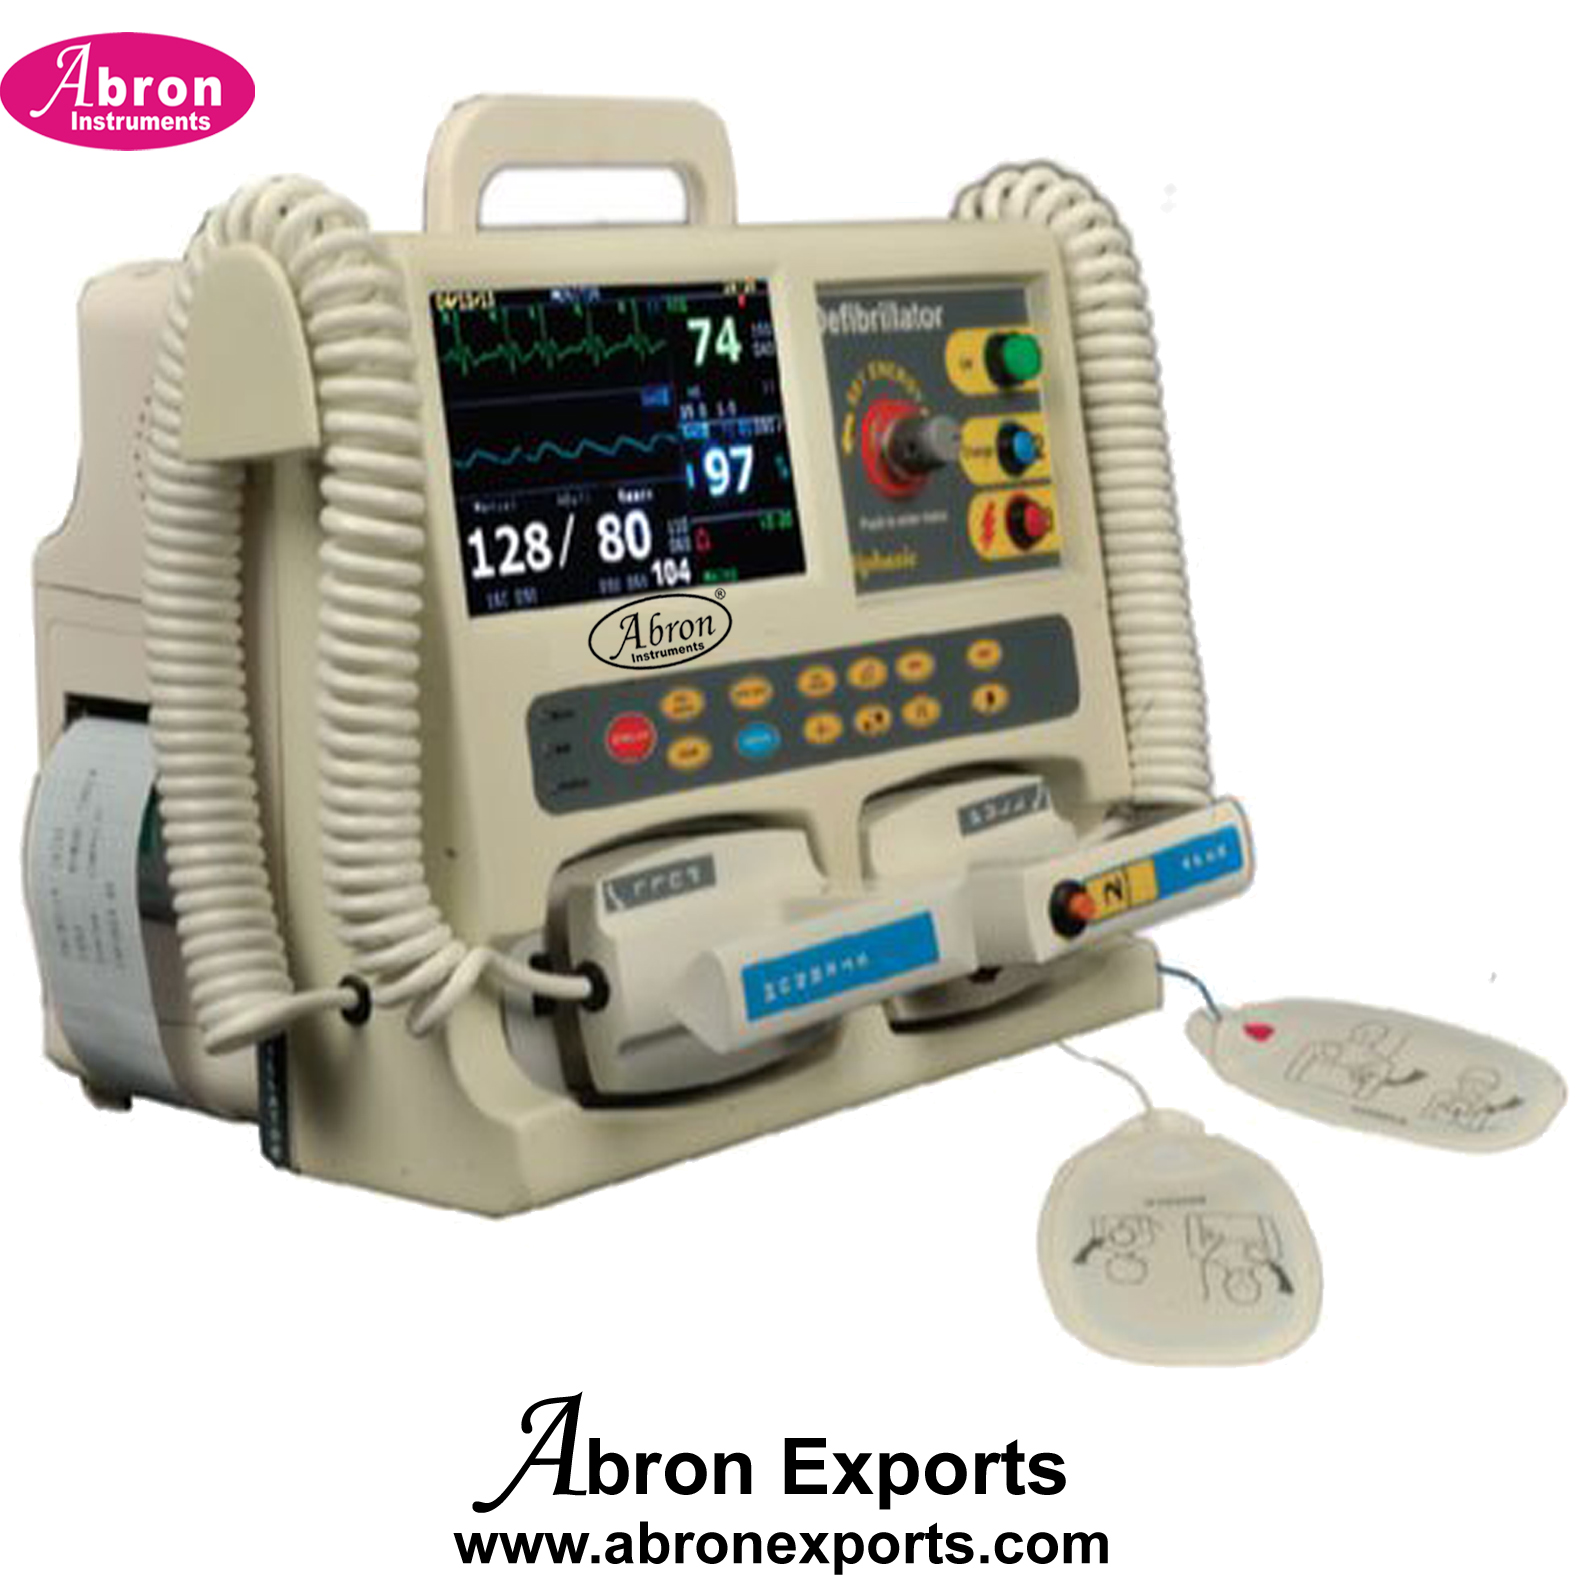 Hospital ICU Defibrillator For Emergency Semi Automatic Surgical Medical Nursing Home Abron ABM-2512DE 